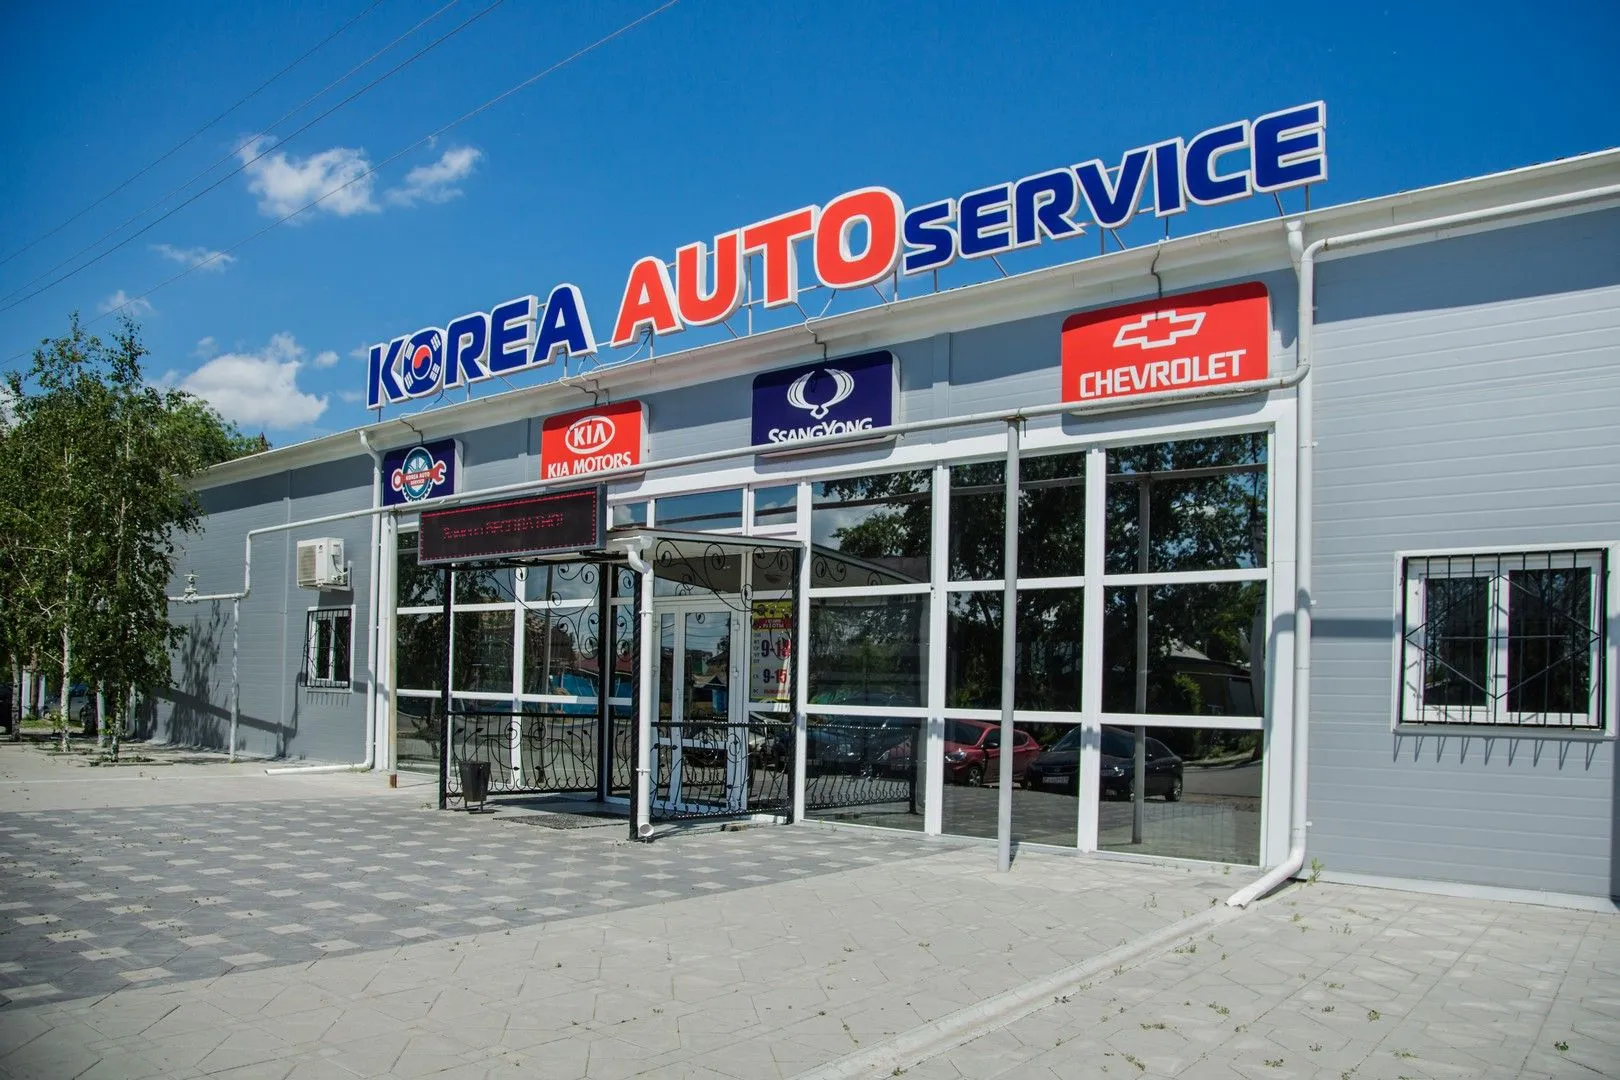 Korea auto service